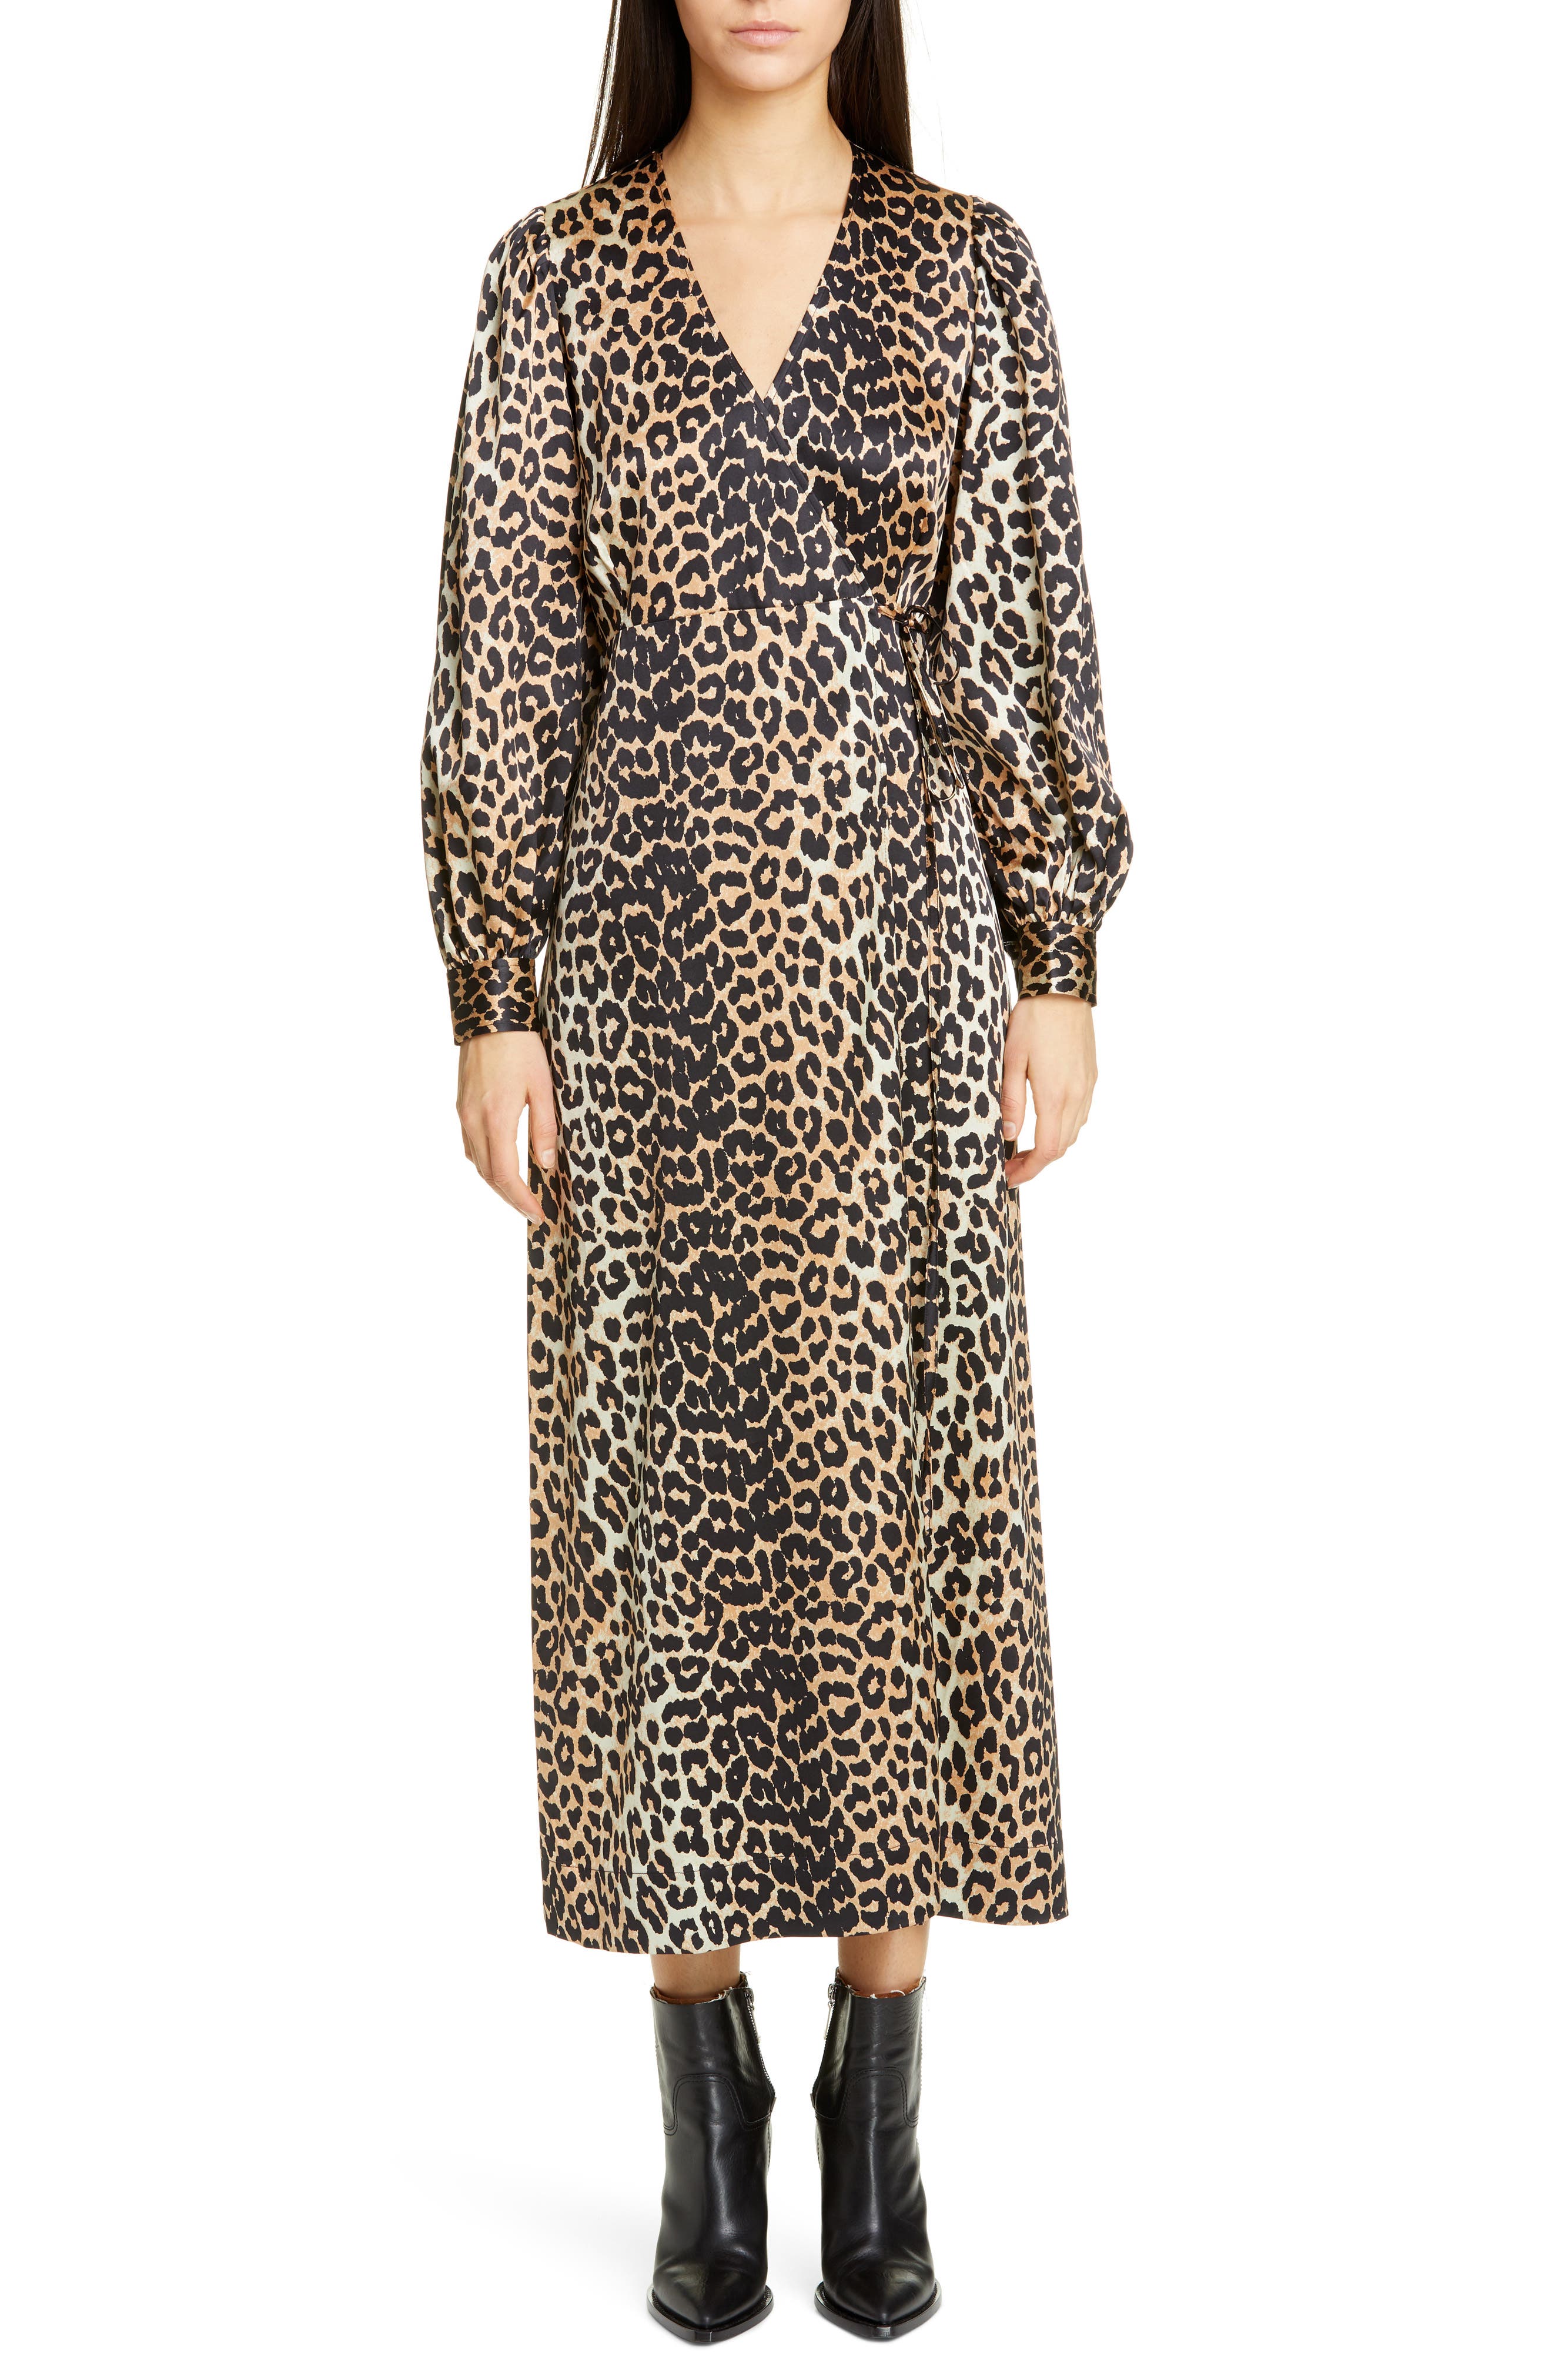 Ganni Leopard Print Wrap Dress Deals ...